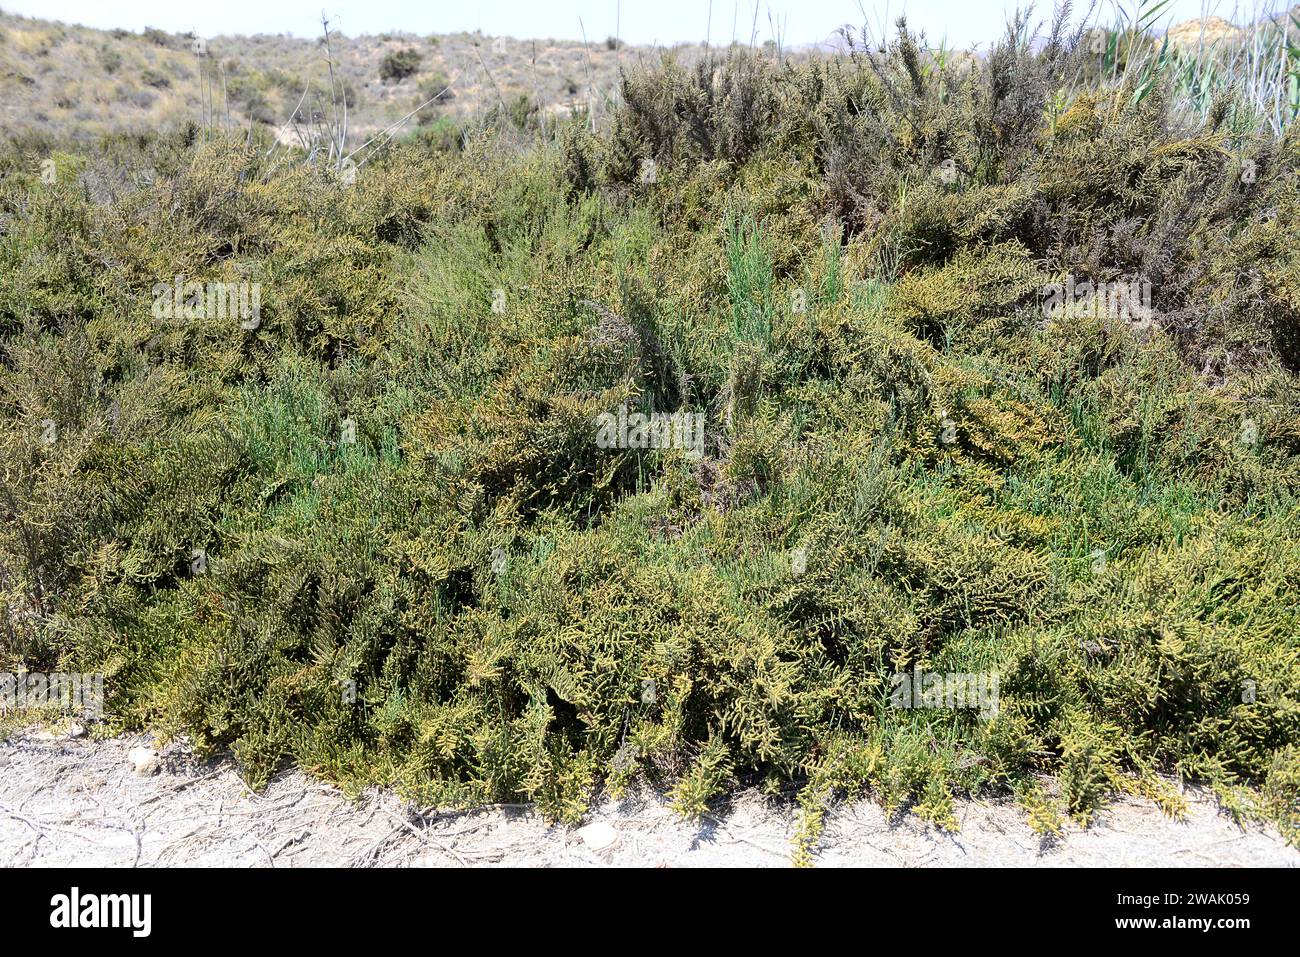 Glasswort, saltwort or samphire (Sarcocornia fruticosa, Salicornia fruticosa or Arthrocnemum fruticosum) is an halophyte shrub native to Mediterranean Stock Photo